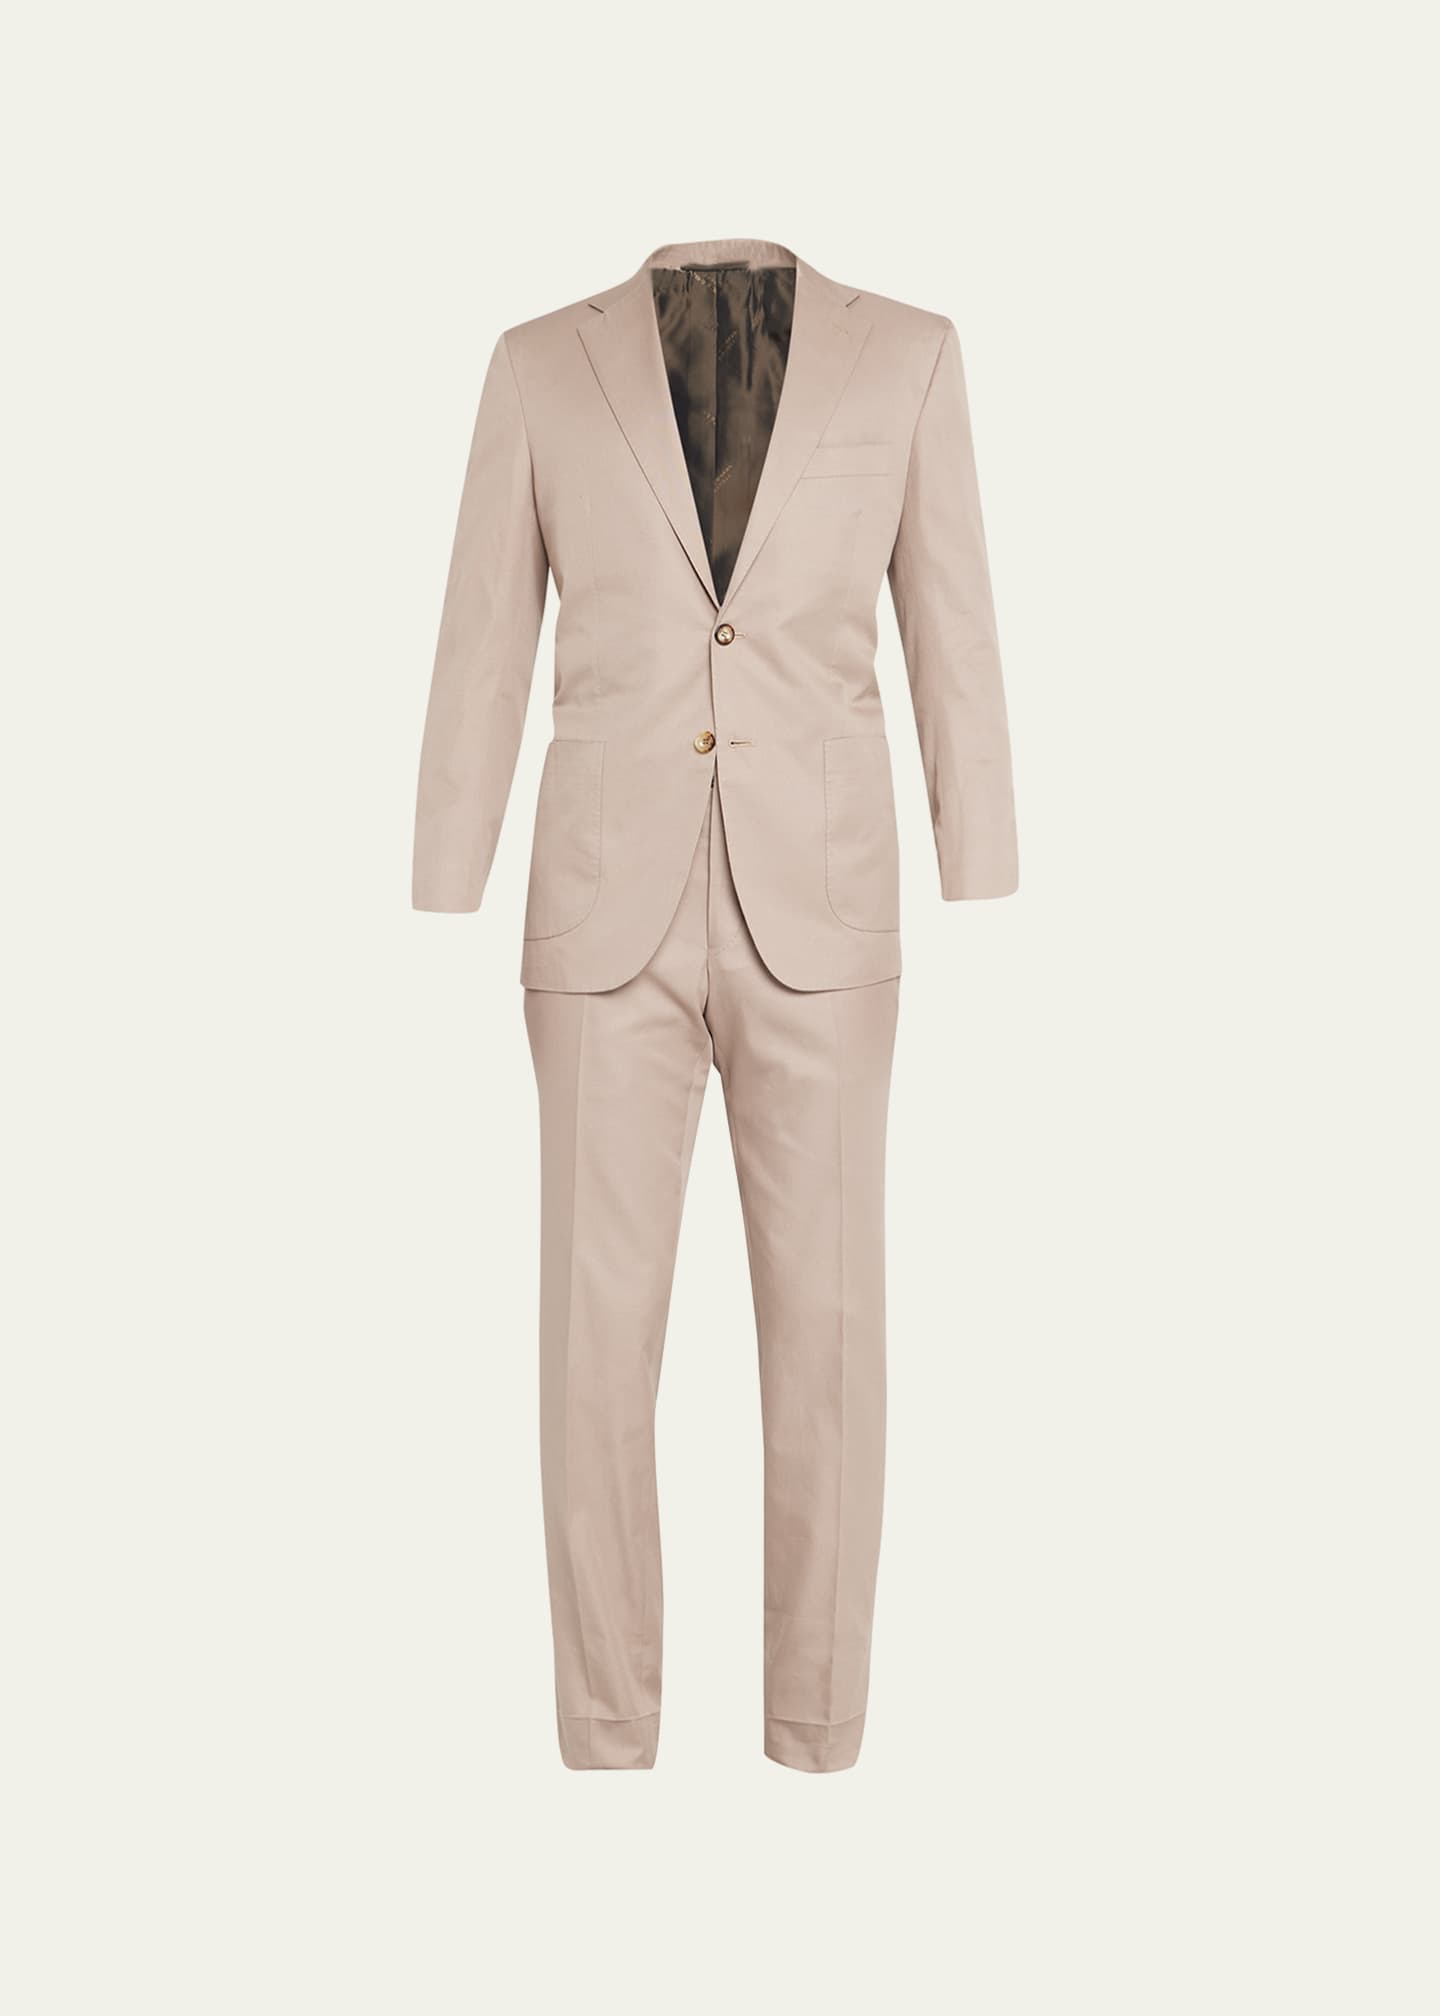 Kiton Men's Sea Island Cotton Suit - Bergdorf Goodman